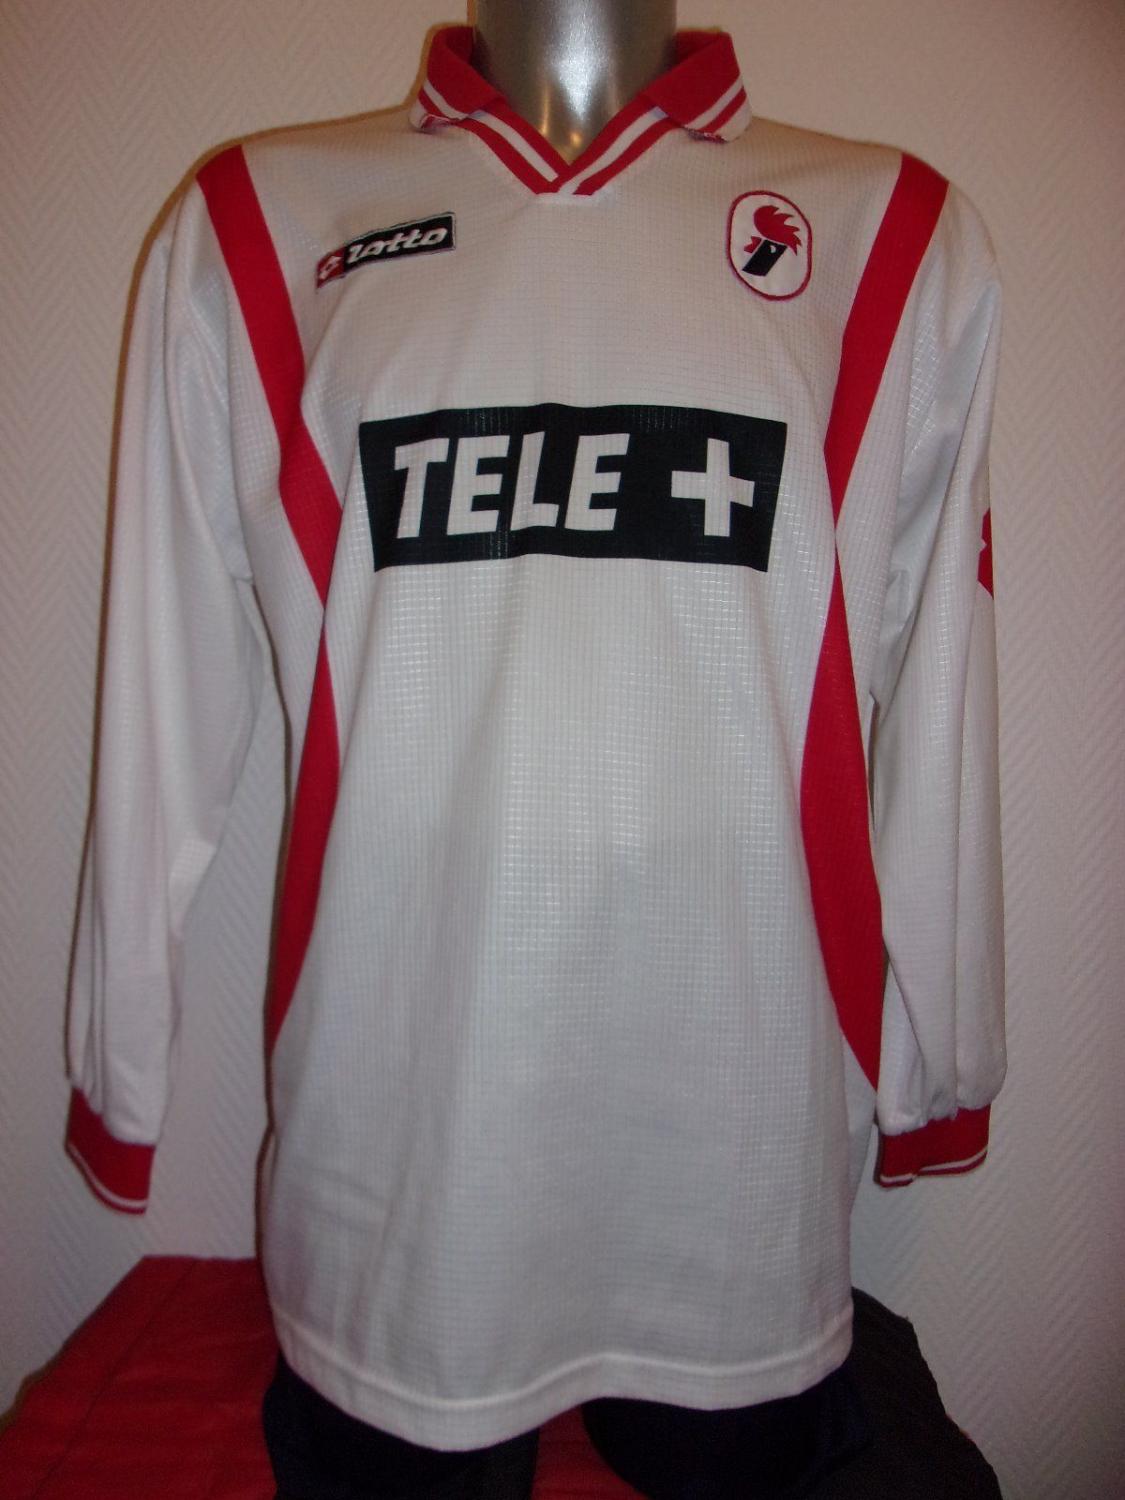 maillot de foot ssc bari domicile 2000-2001 rétro